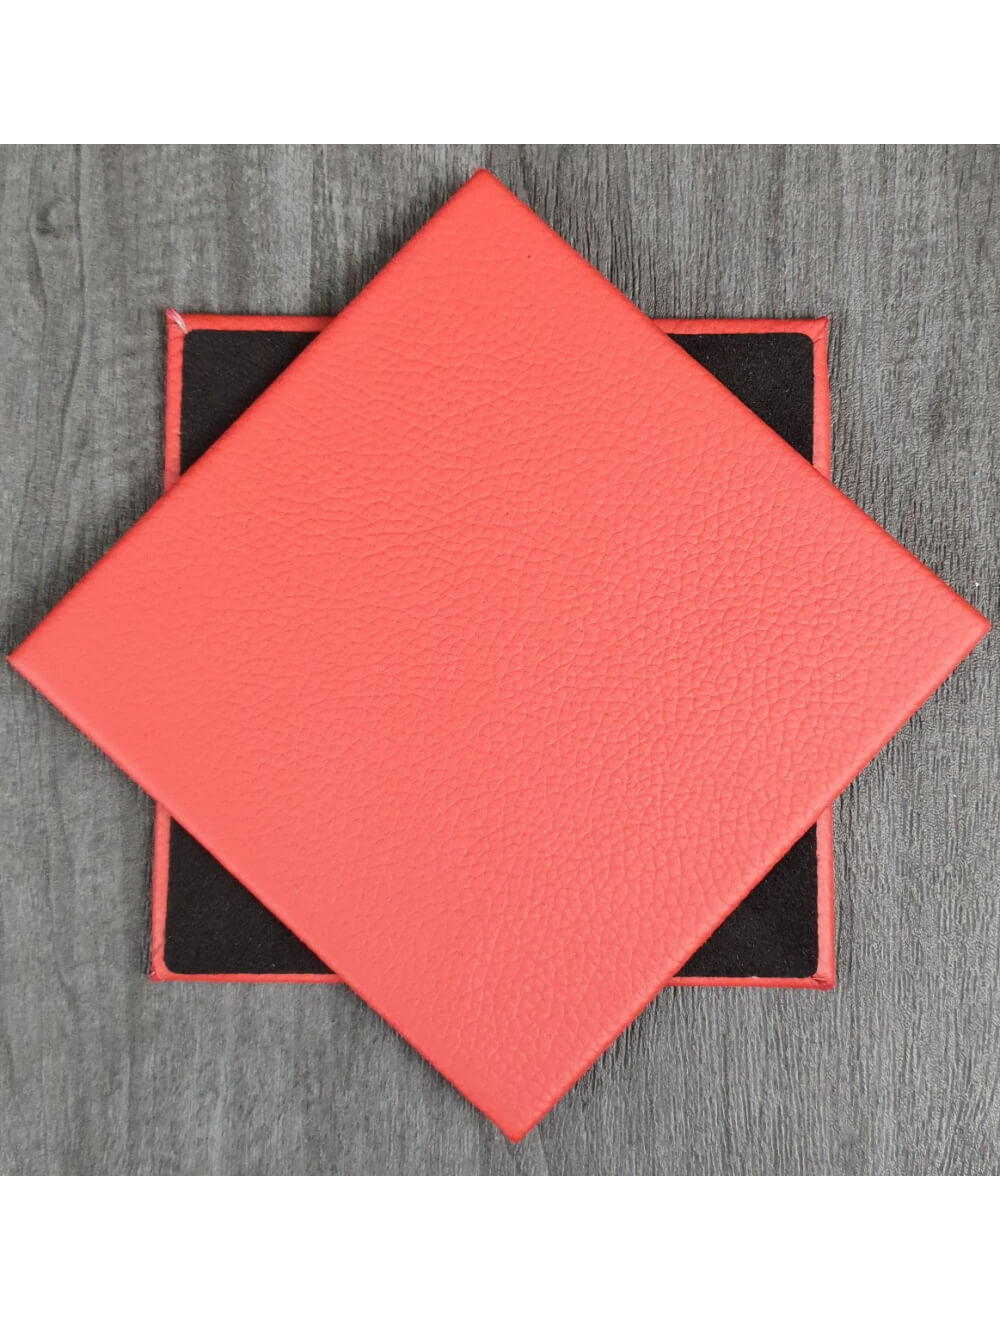 Poppy Shelly Leather Coaster - 10cm Sq (myydään)